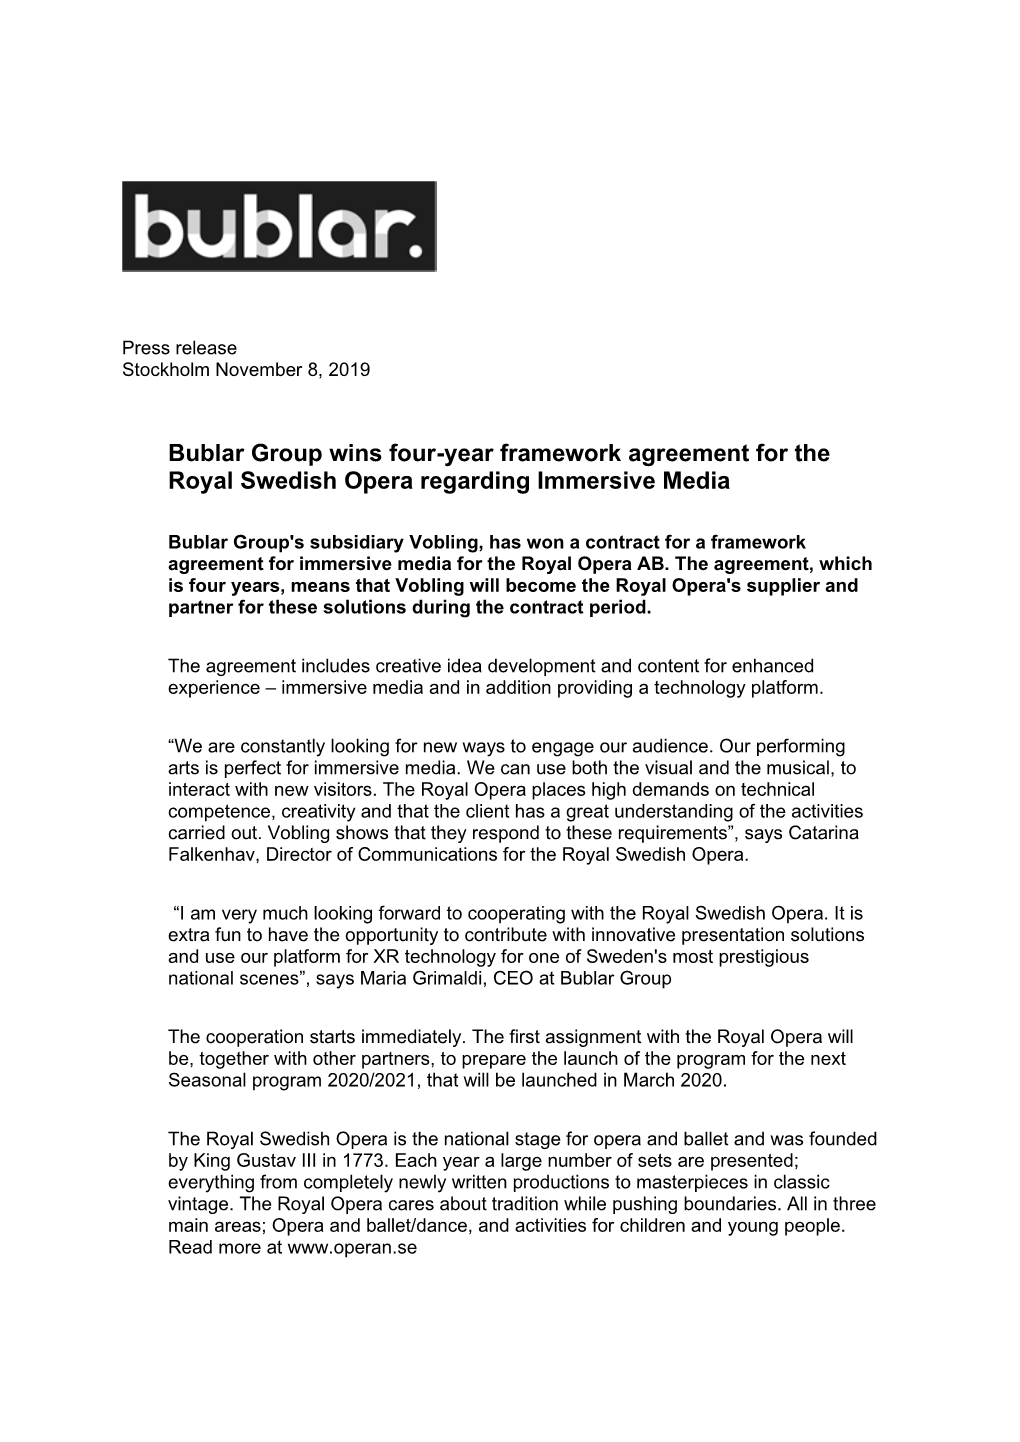 Bublar Group Wins Four-Year Framework Agreement for the Royal Swedish Opera Regarding Immersive Media